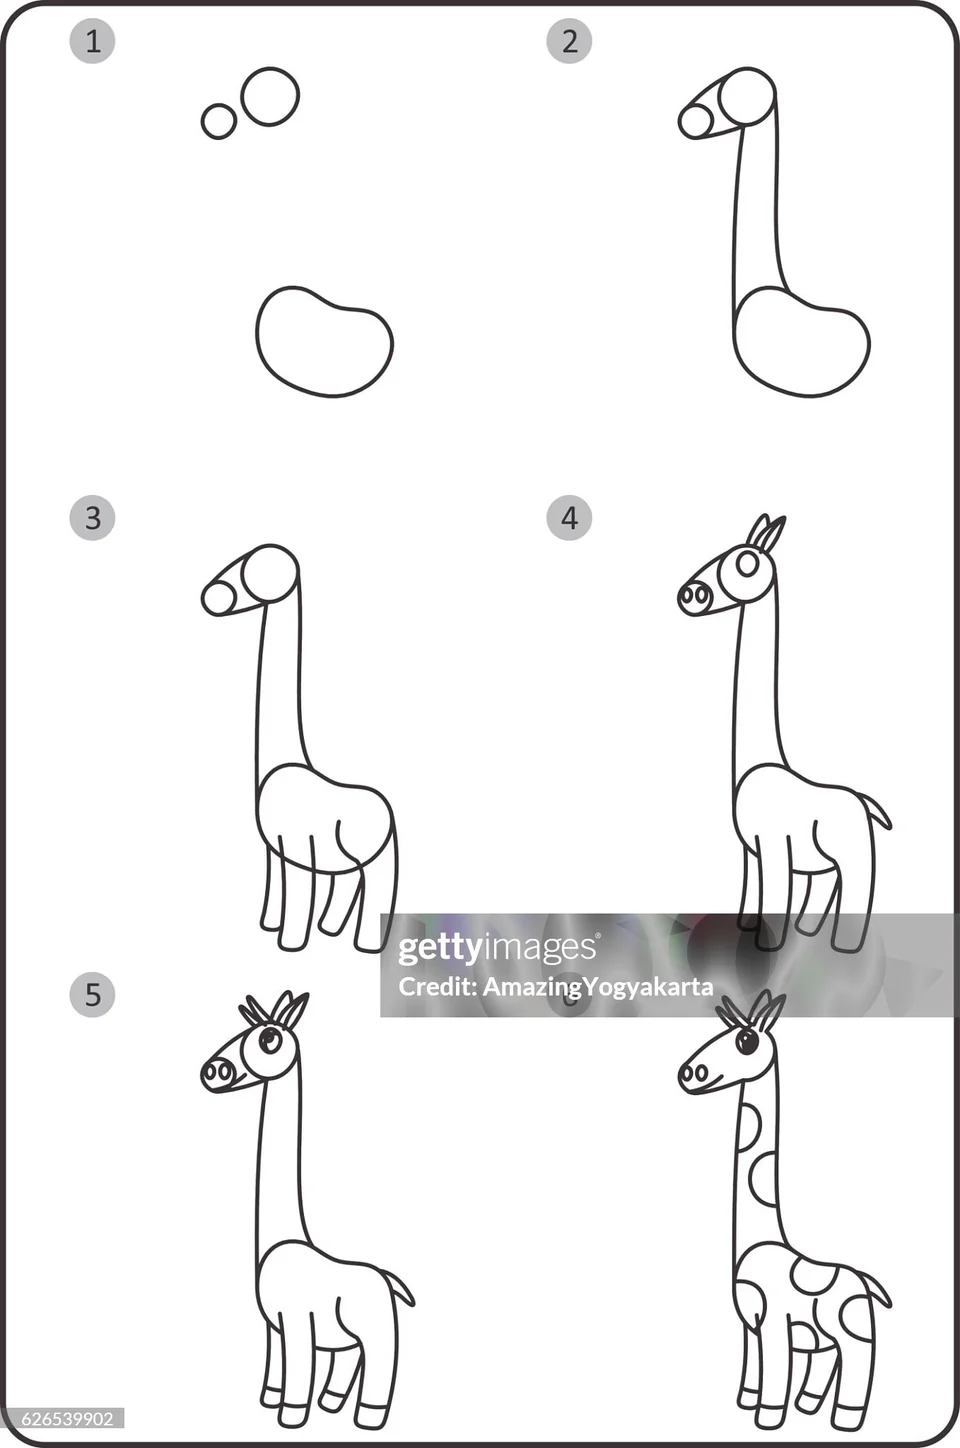 Рисунок жирафа поэтапно